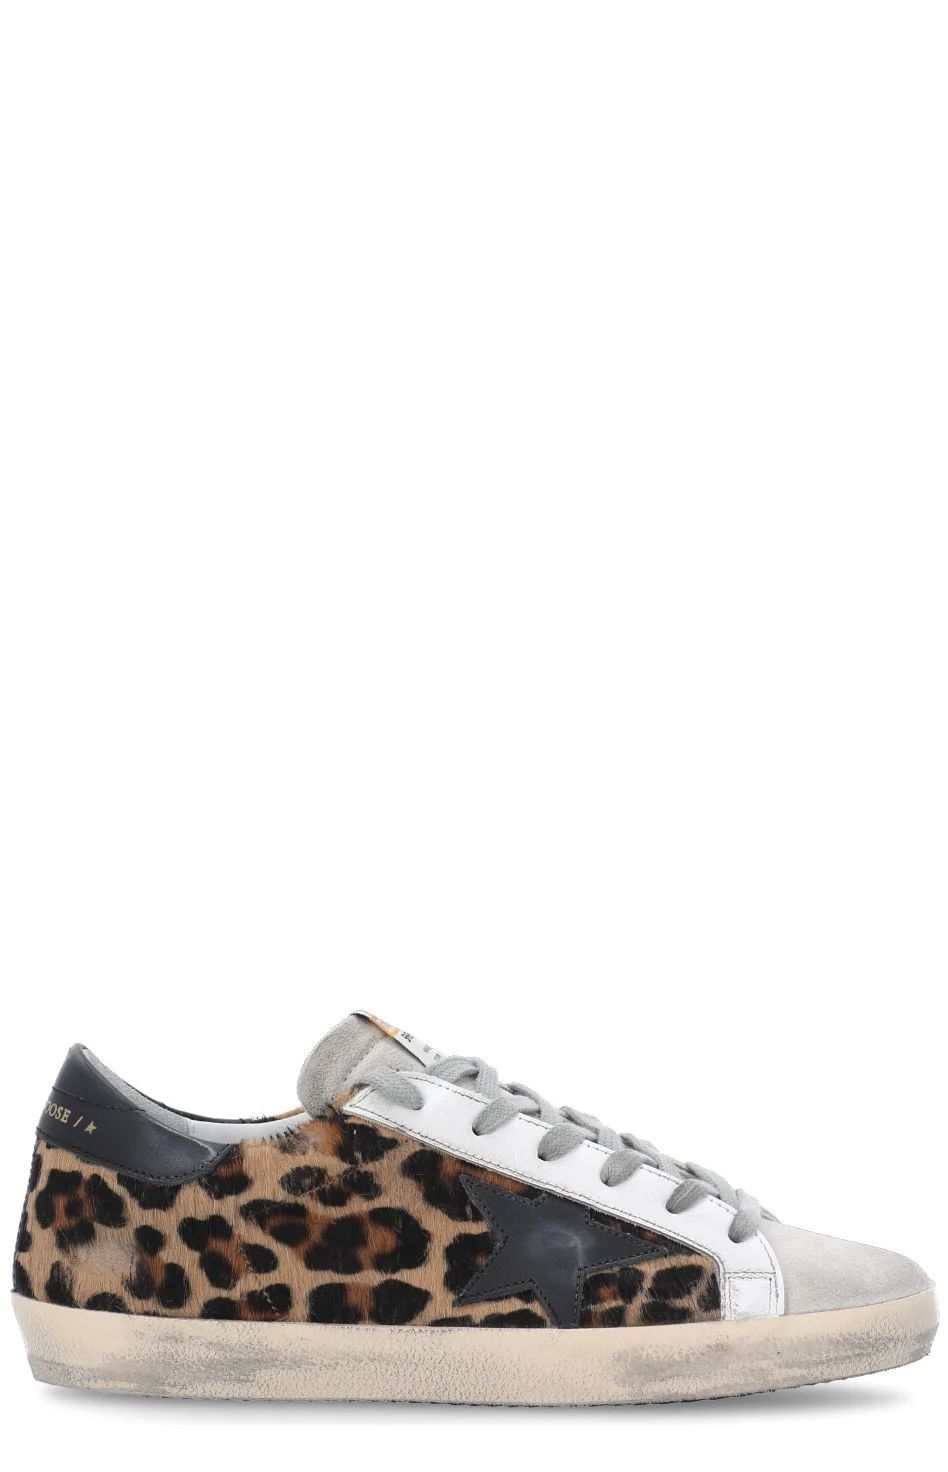 Golden Goose Deluxe Brand Super-Star Leopard Print Sneakers | Cettire Global